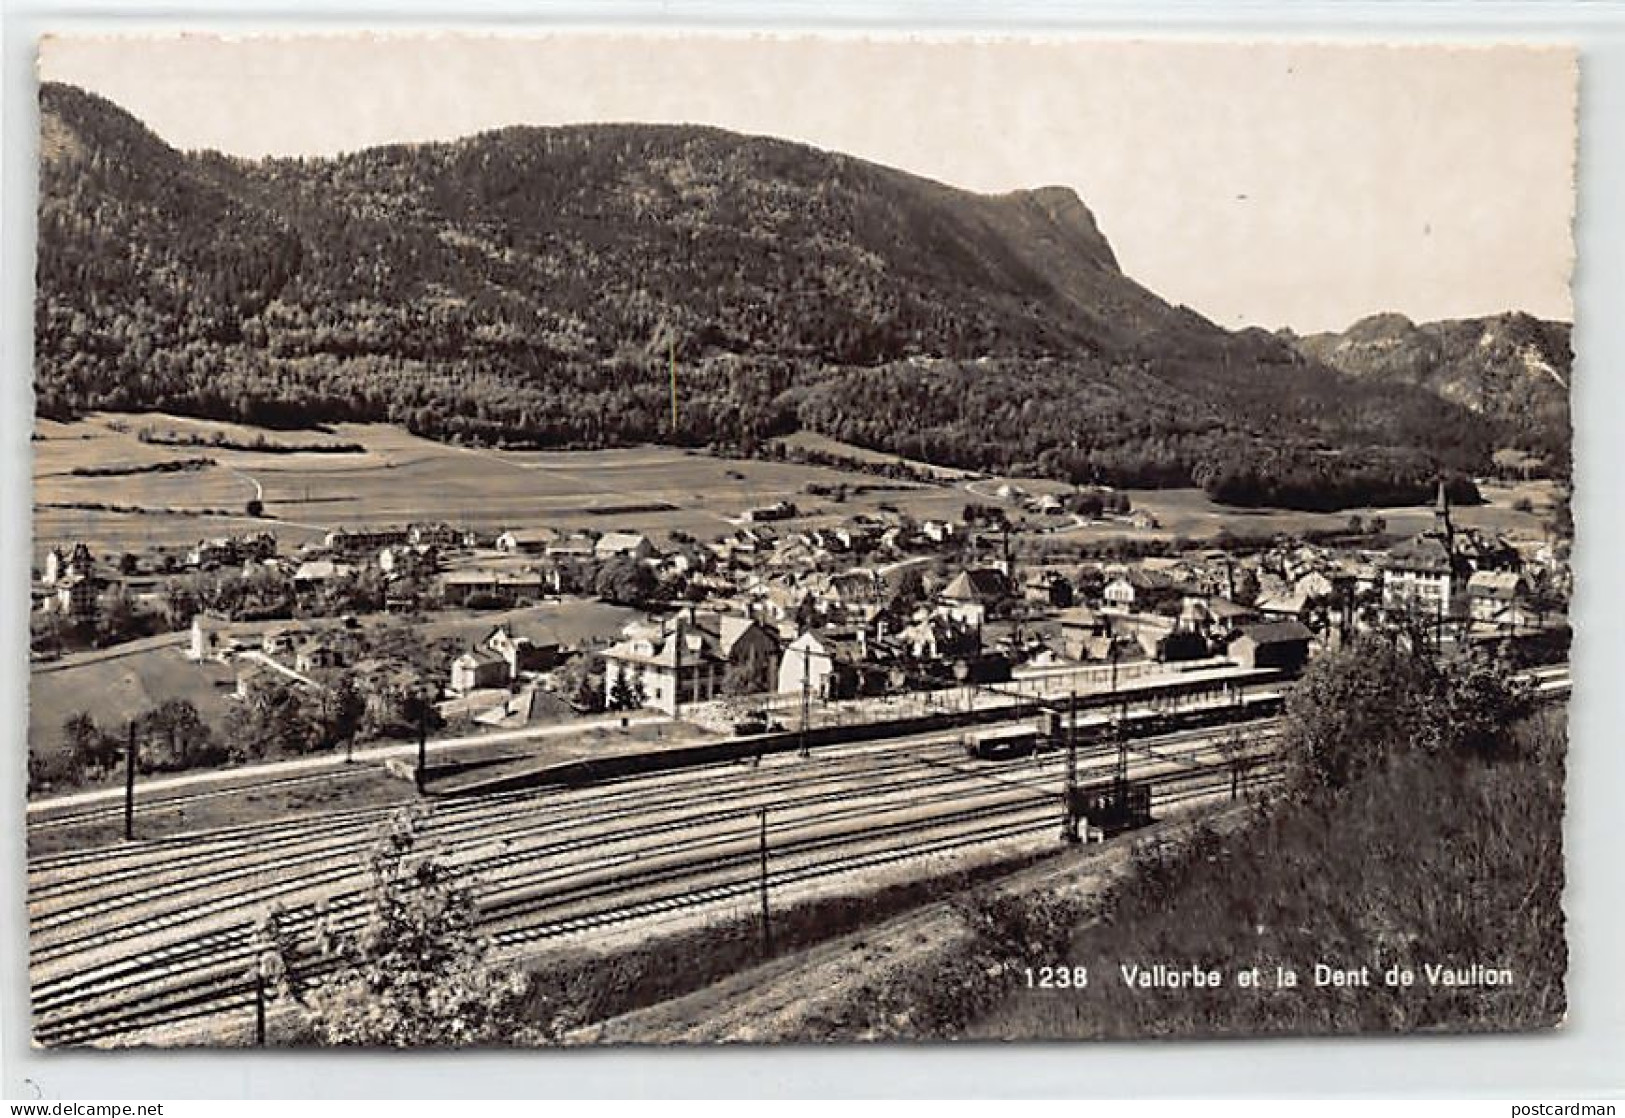 VALLORBE (VD) Vie Générale - La Gare - Ed. Deriaz 1238 - Vallorbe